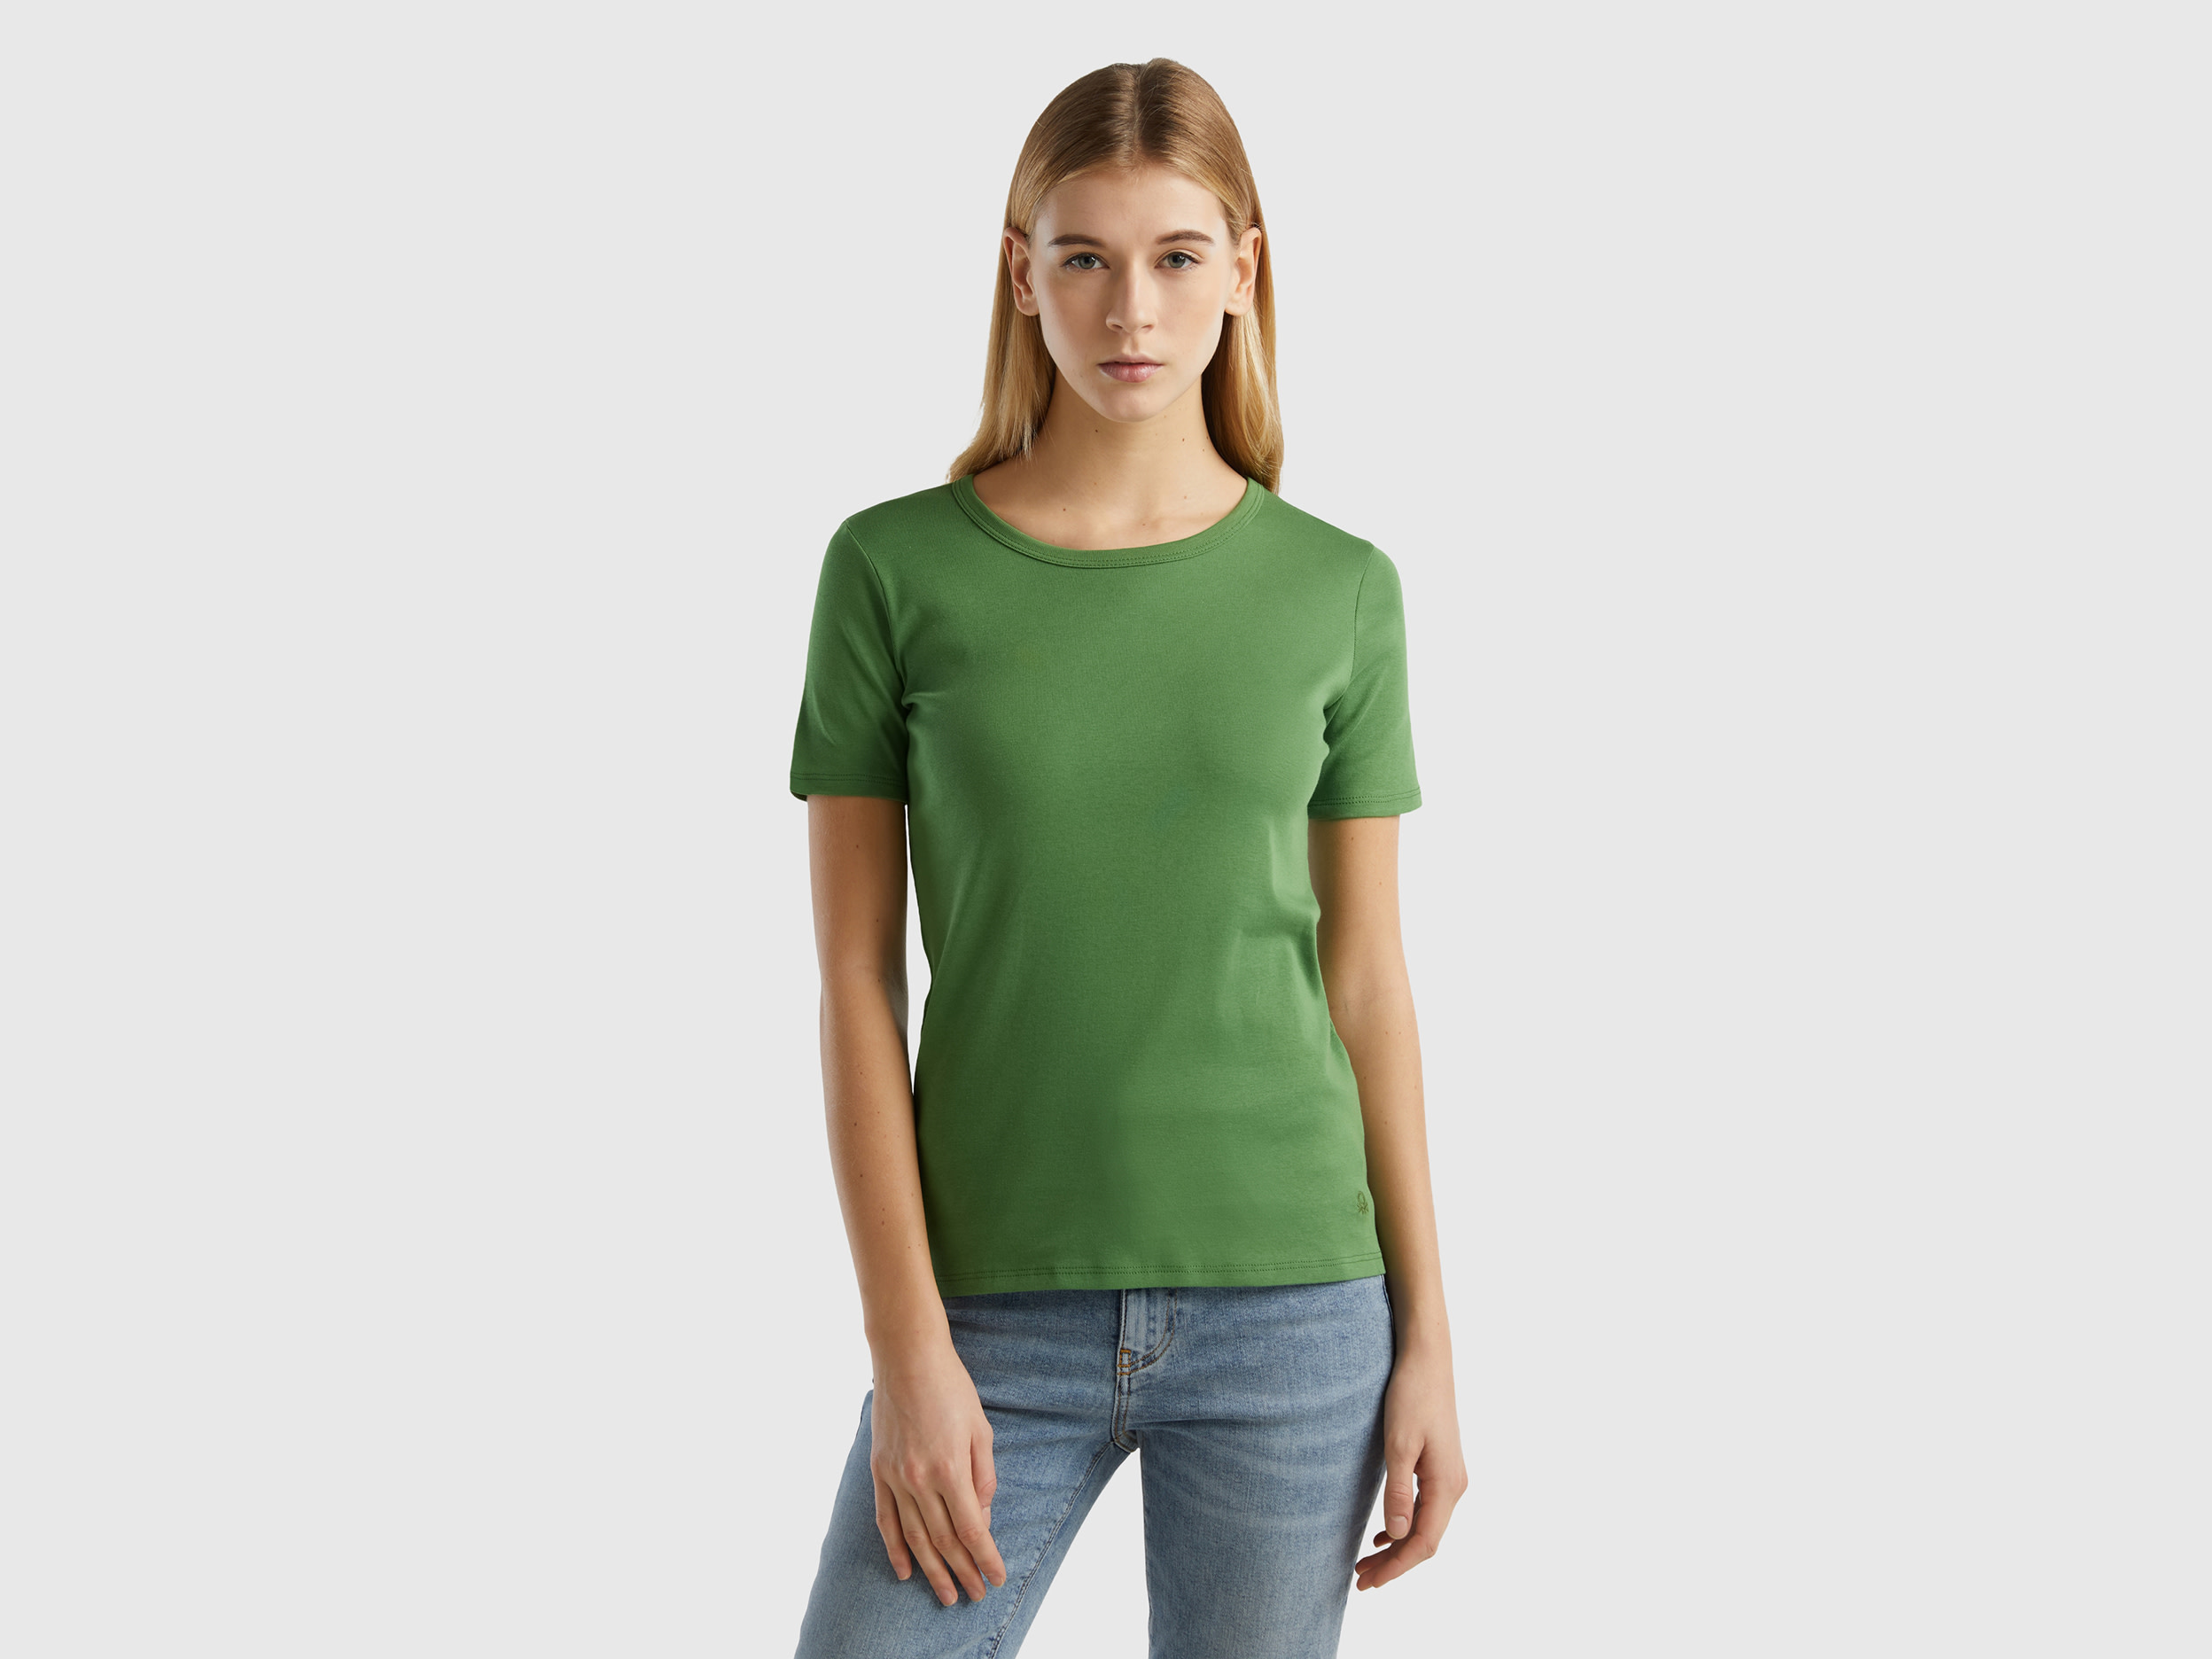 Benetton, Long Fiber Cotton T-shirt, size XS, Military Green, Women